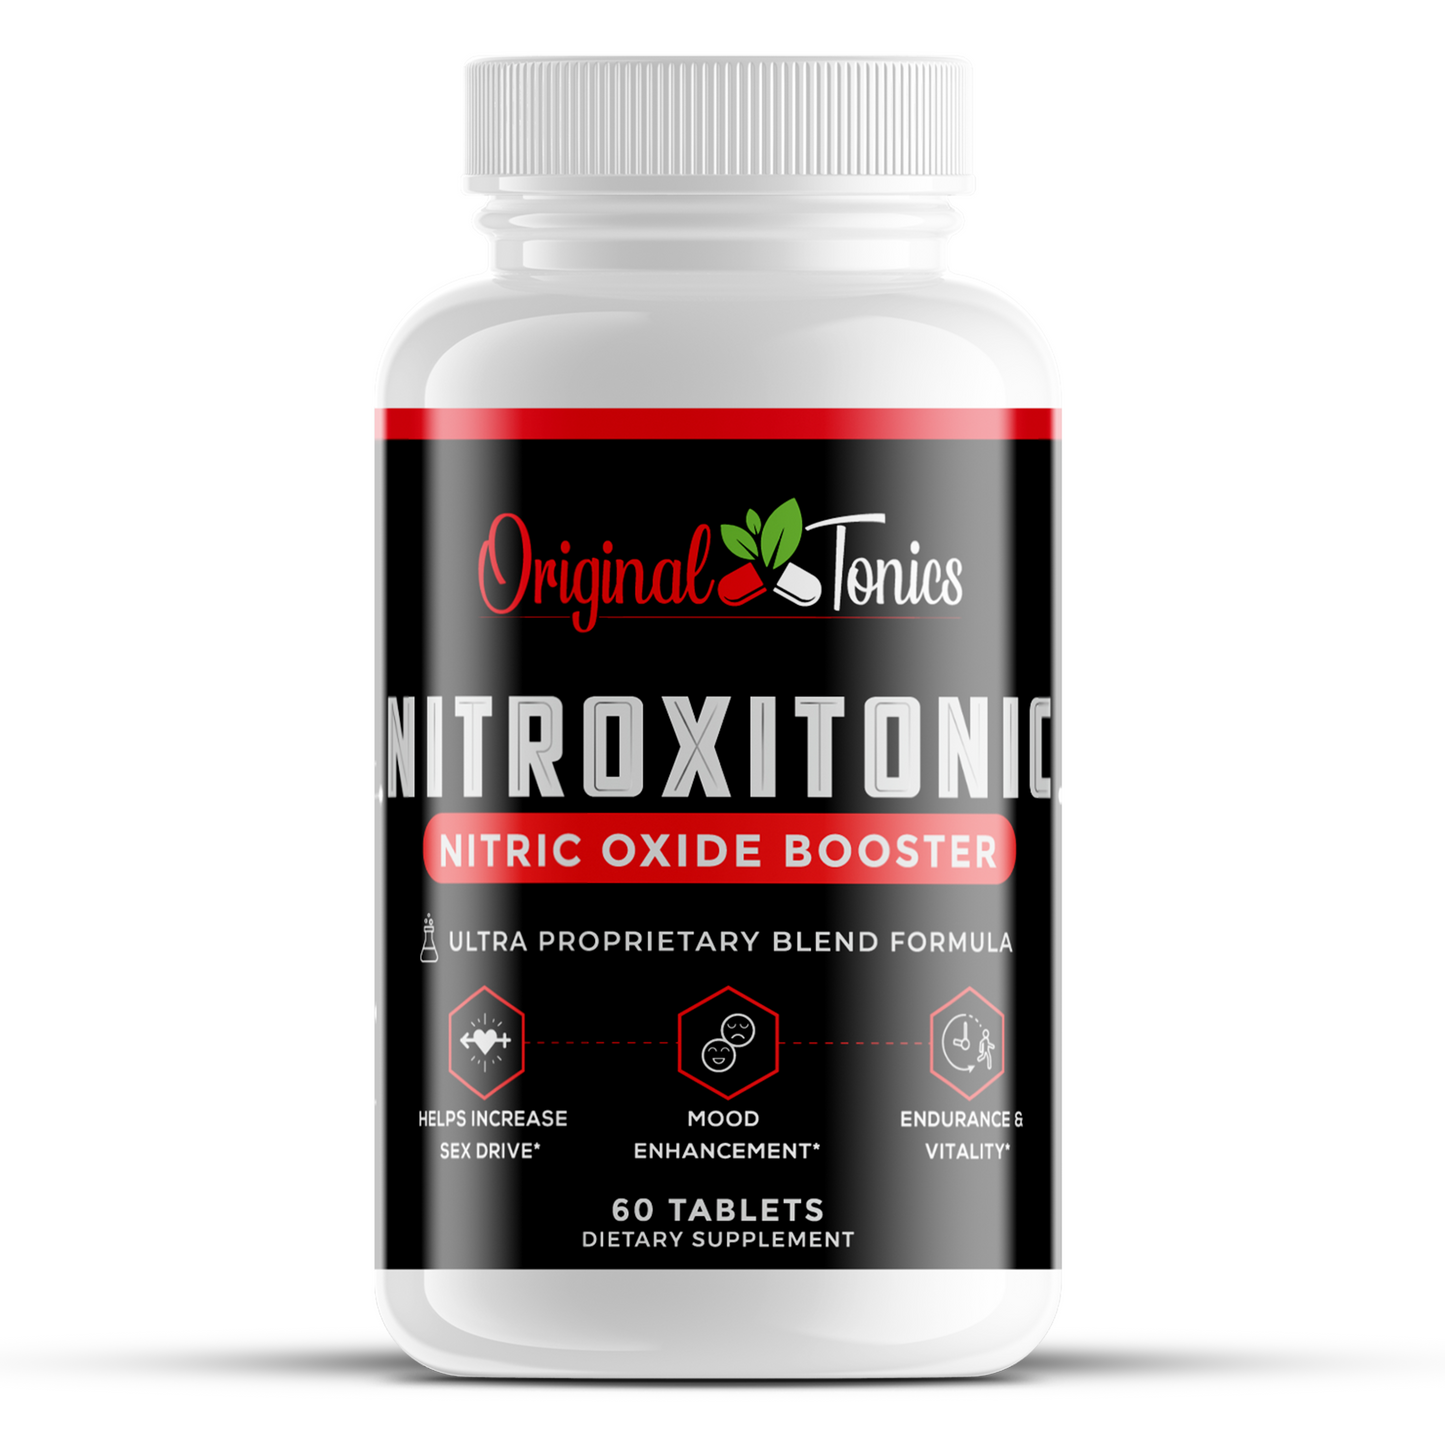 NITROXITONIC-Nitric Oxide Booster